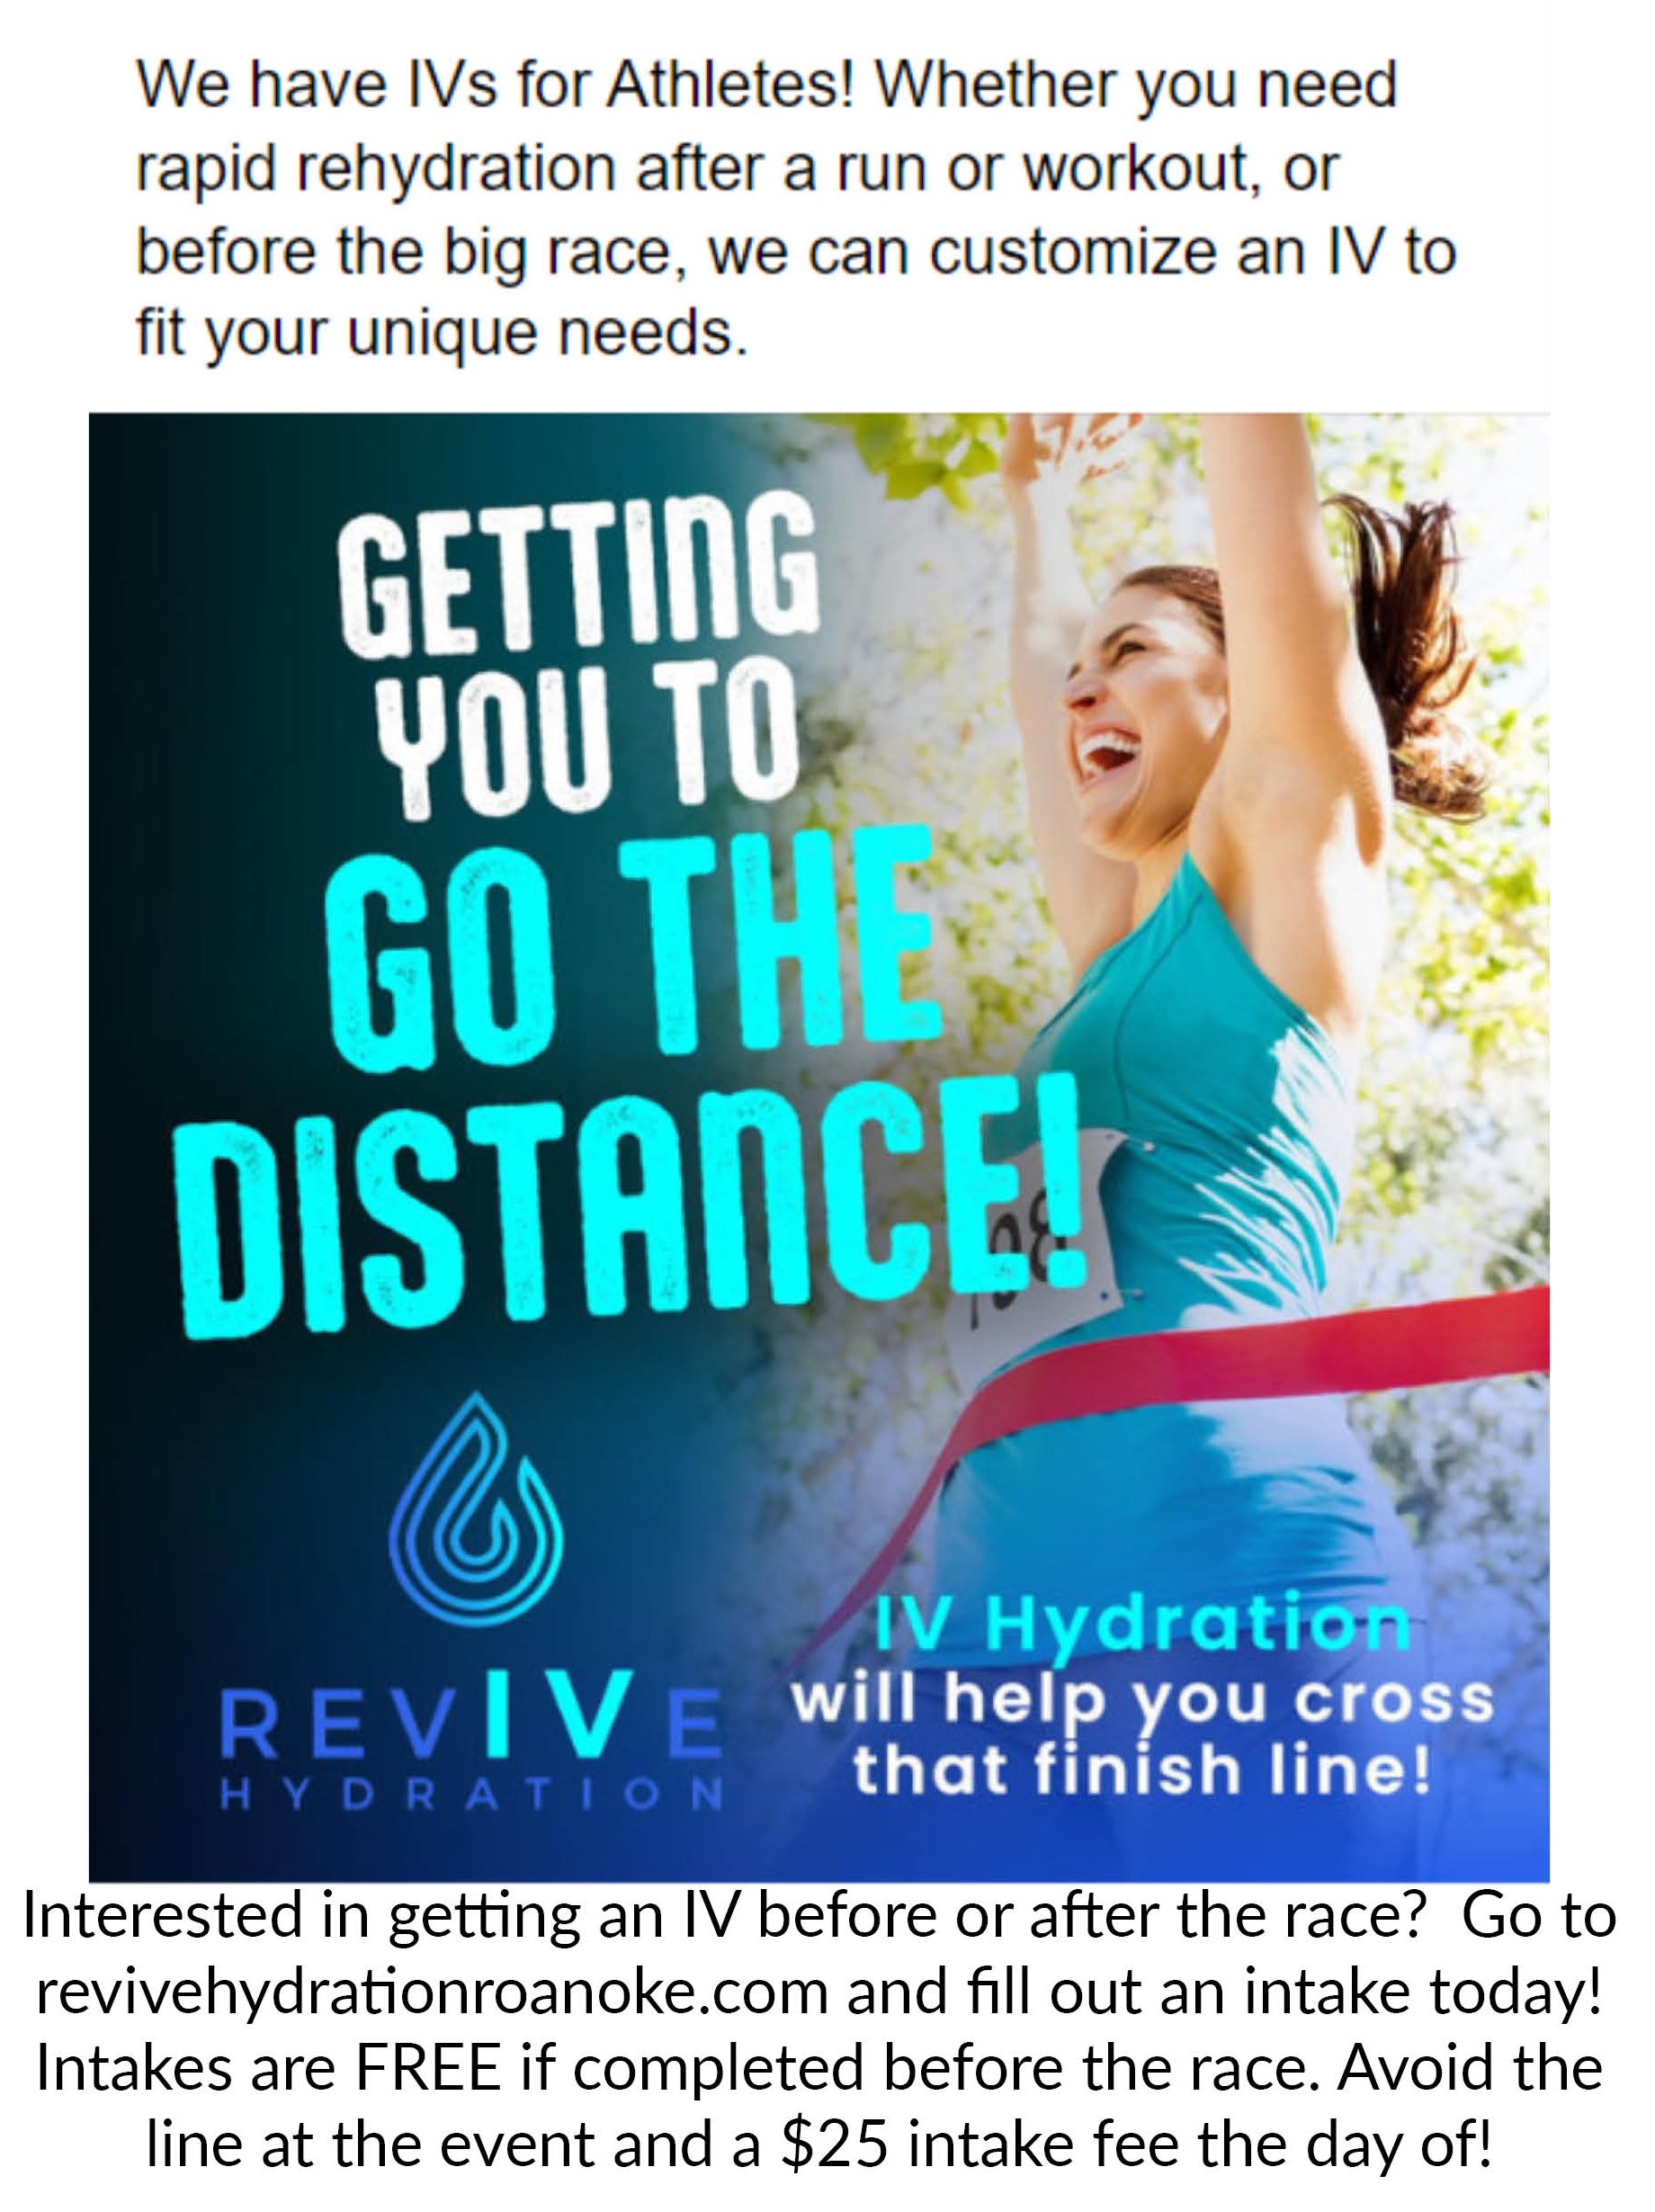 Sponsor RevIVe Hydration